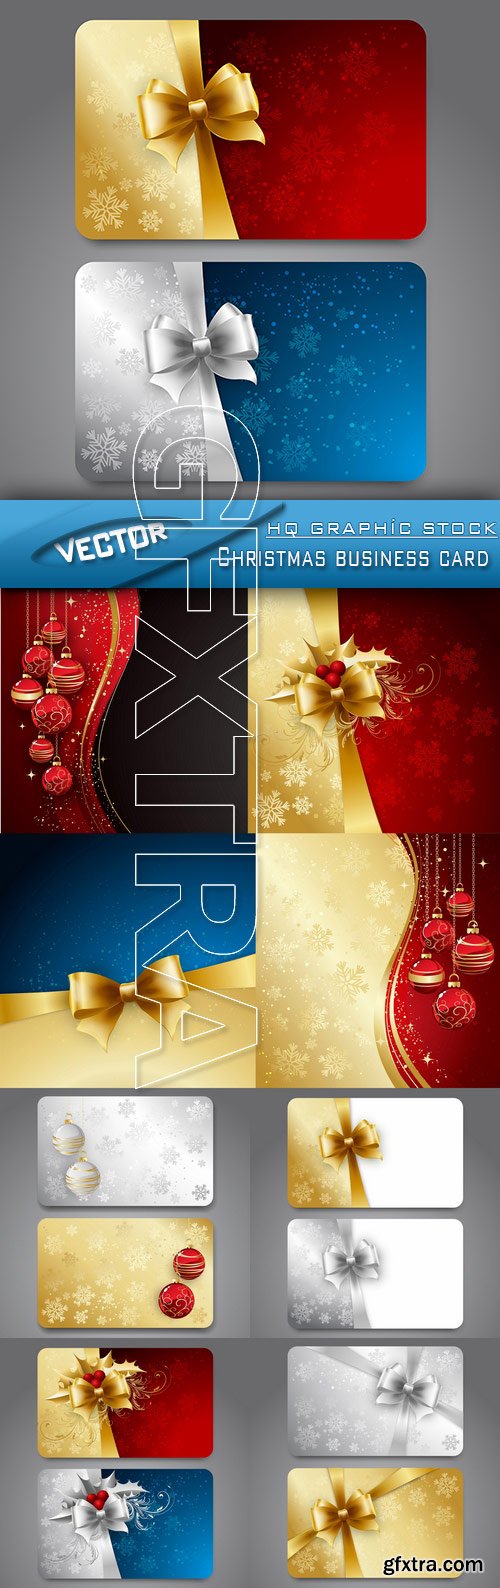 Stock Vector - Christmas business card